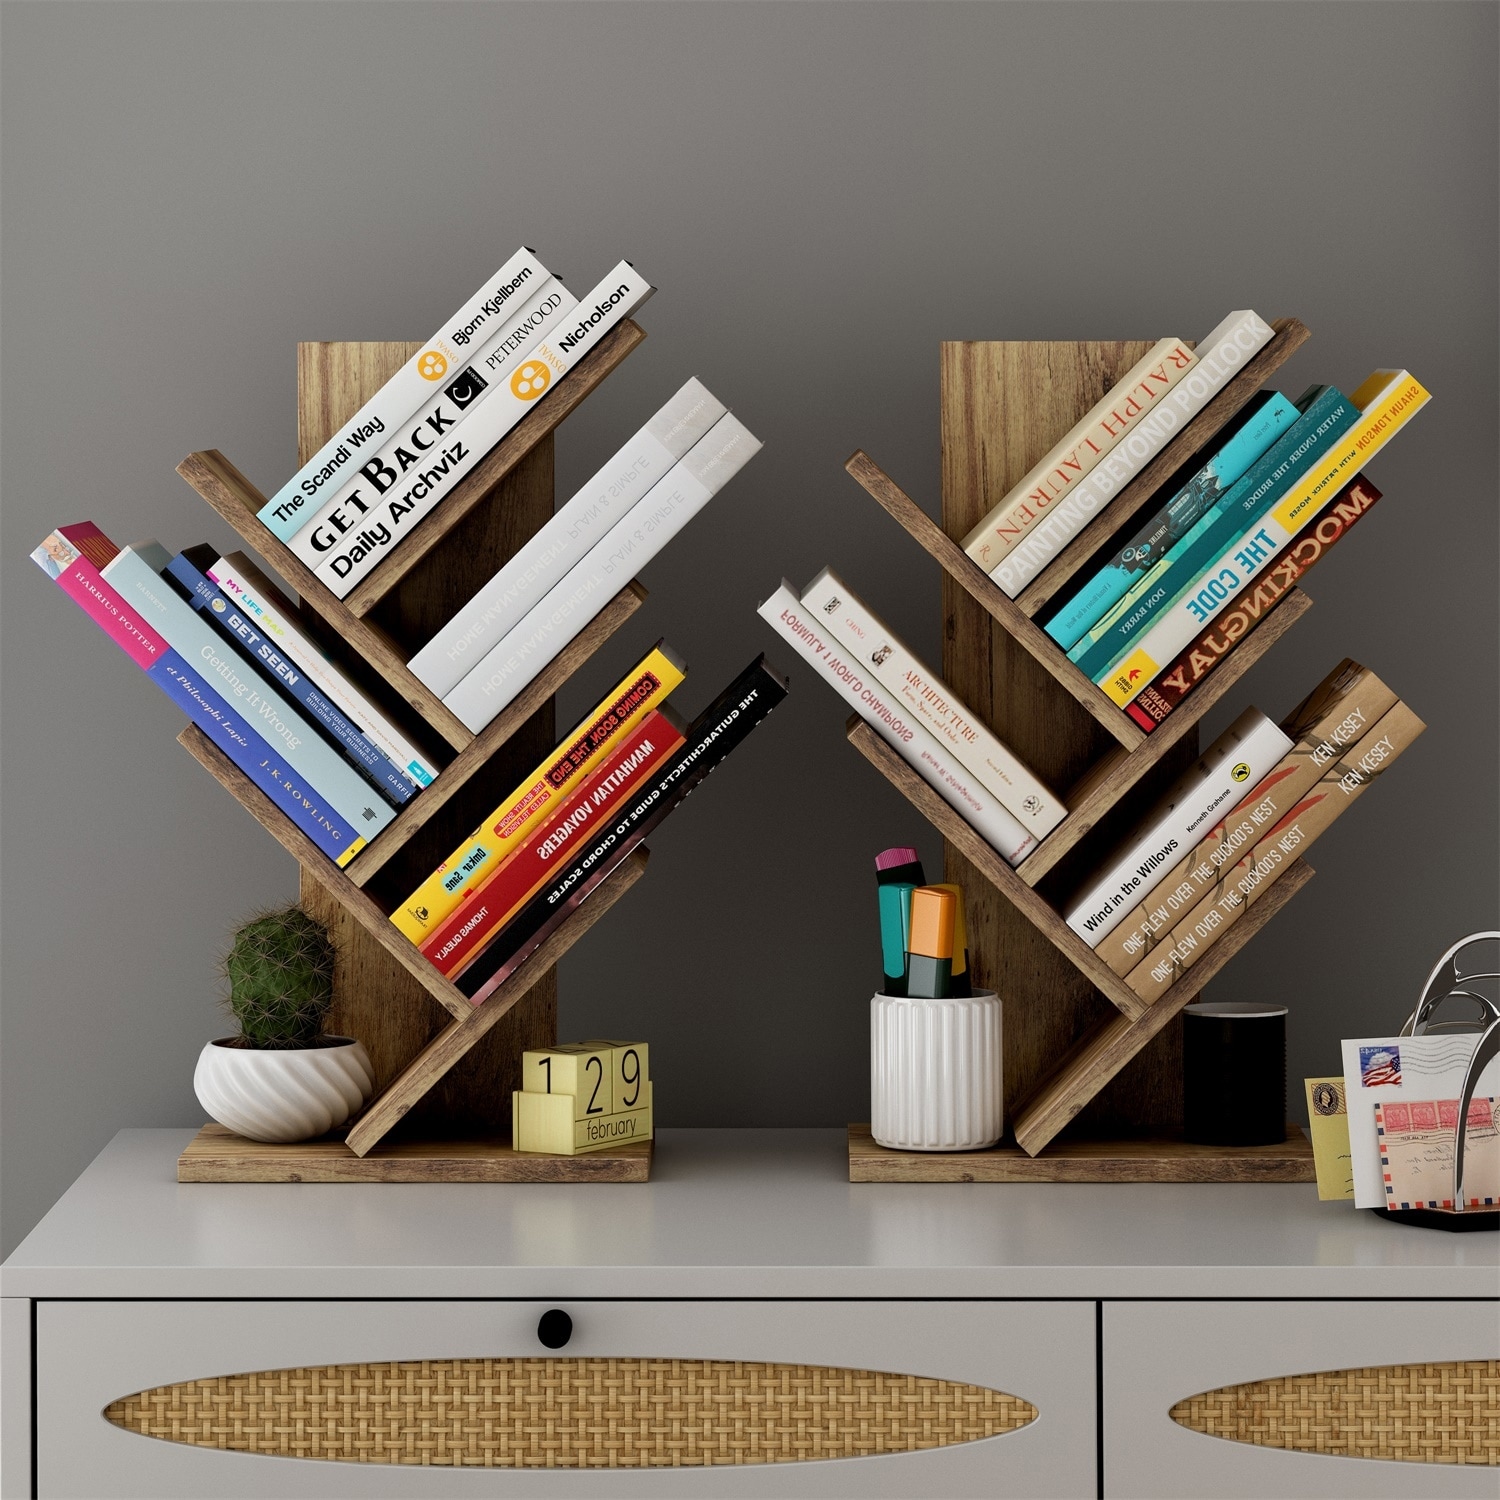 https://ak1.ostkcdn.com/images/products/is/images/direct/7e40763303e4c1a0c39affc7ff046469c87a1e12/2pcs-4-Layer-Small-Bookshelf-Organizer-Floor-Standing-Desktop-Bookcase.jpg